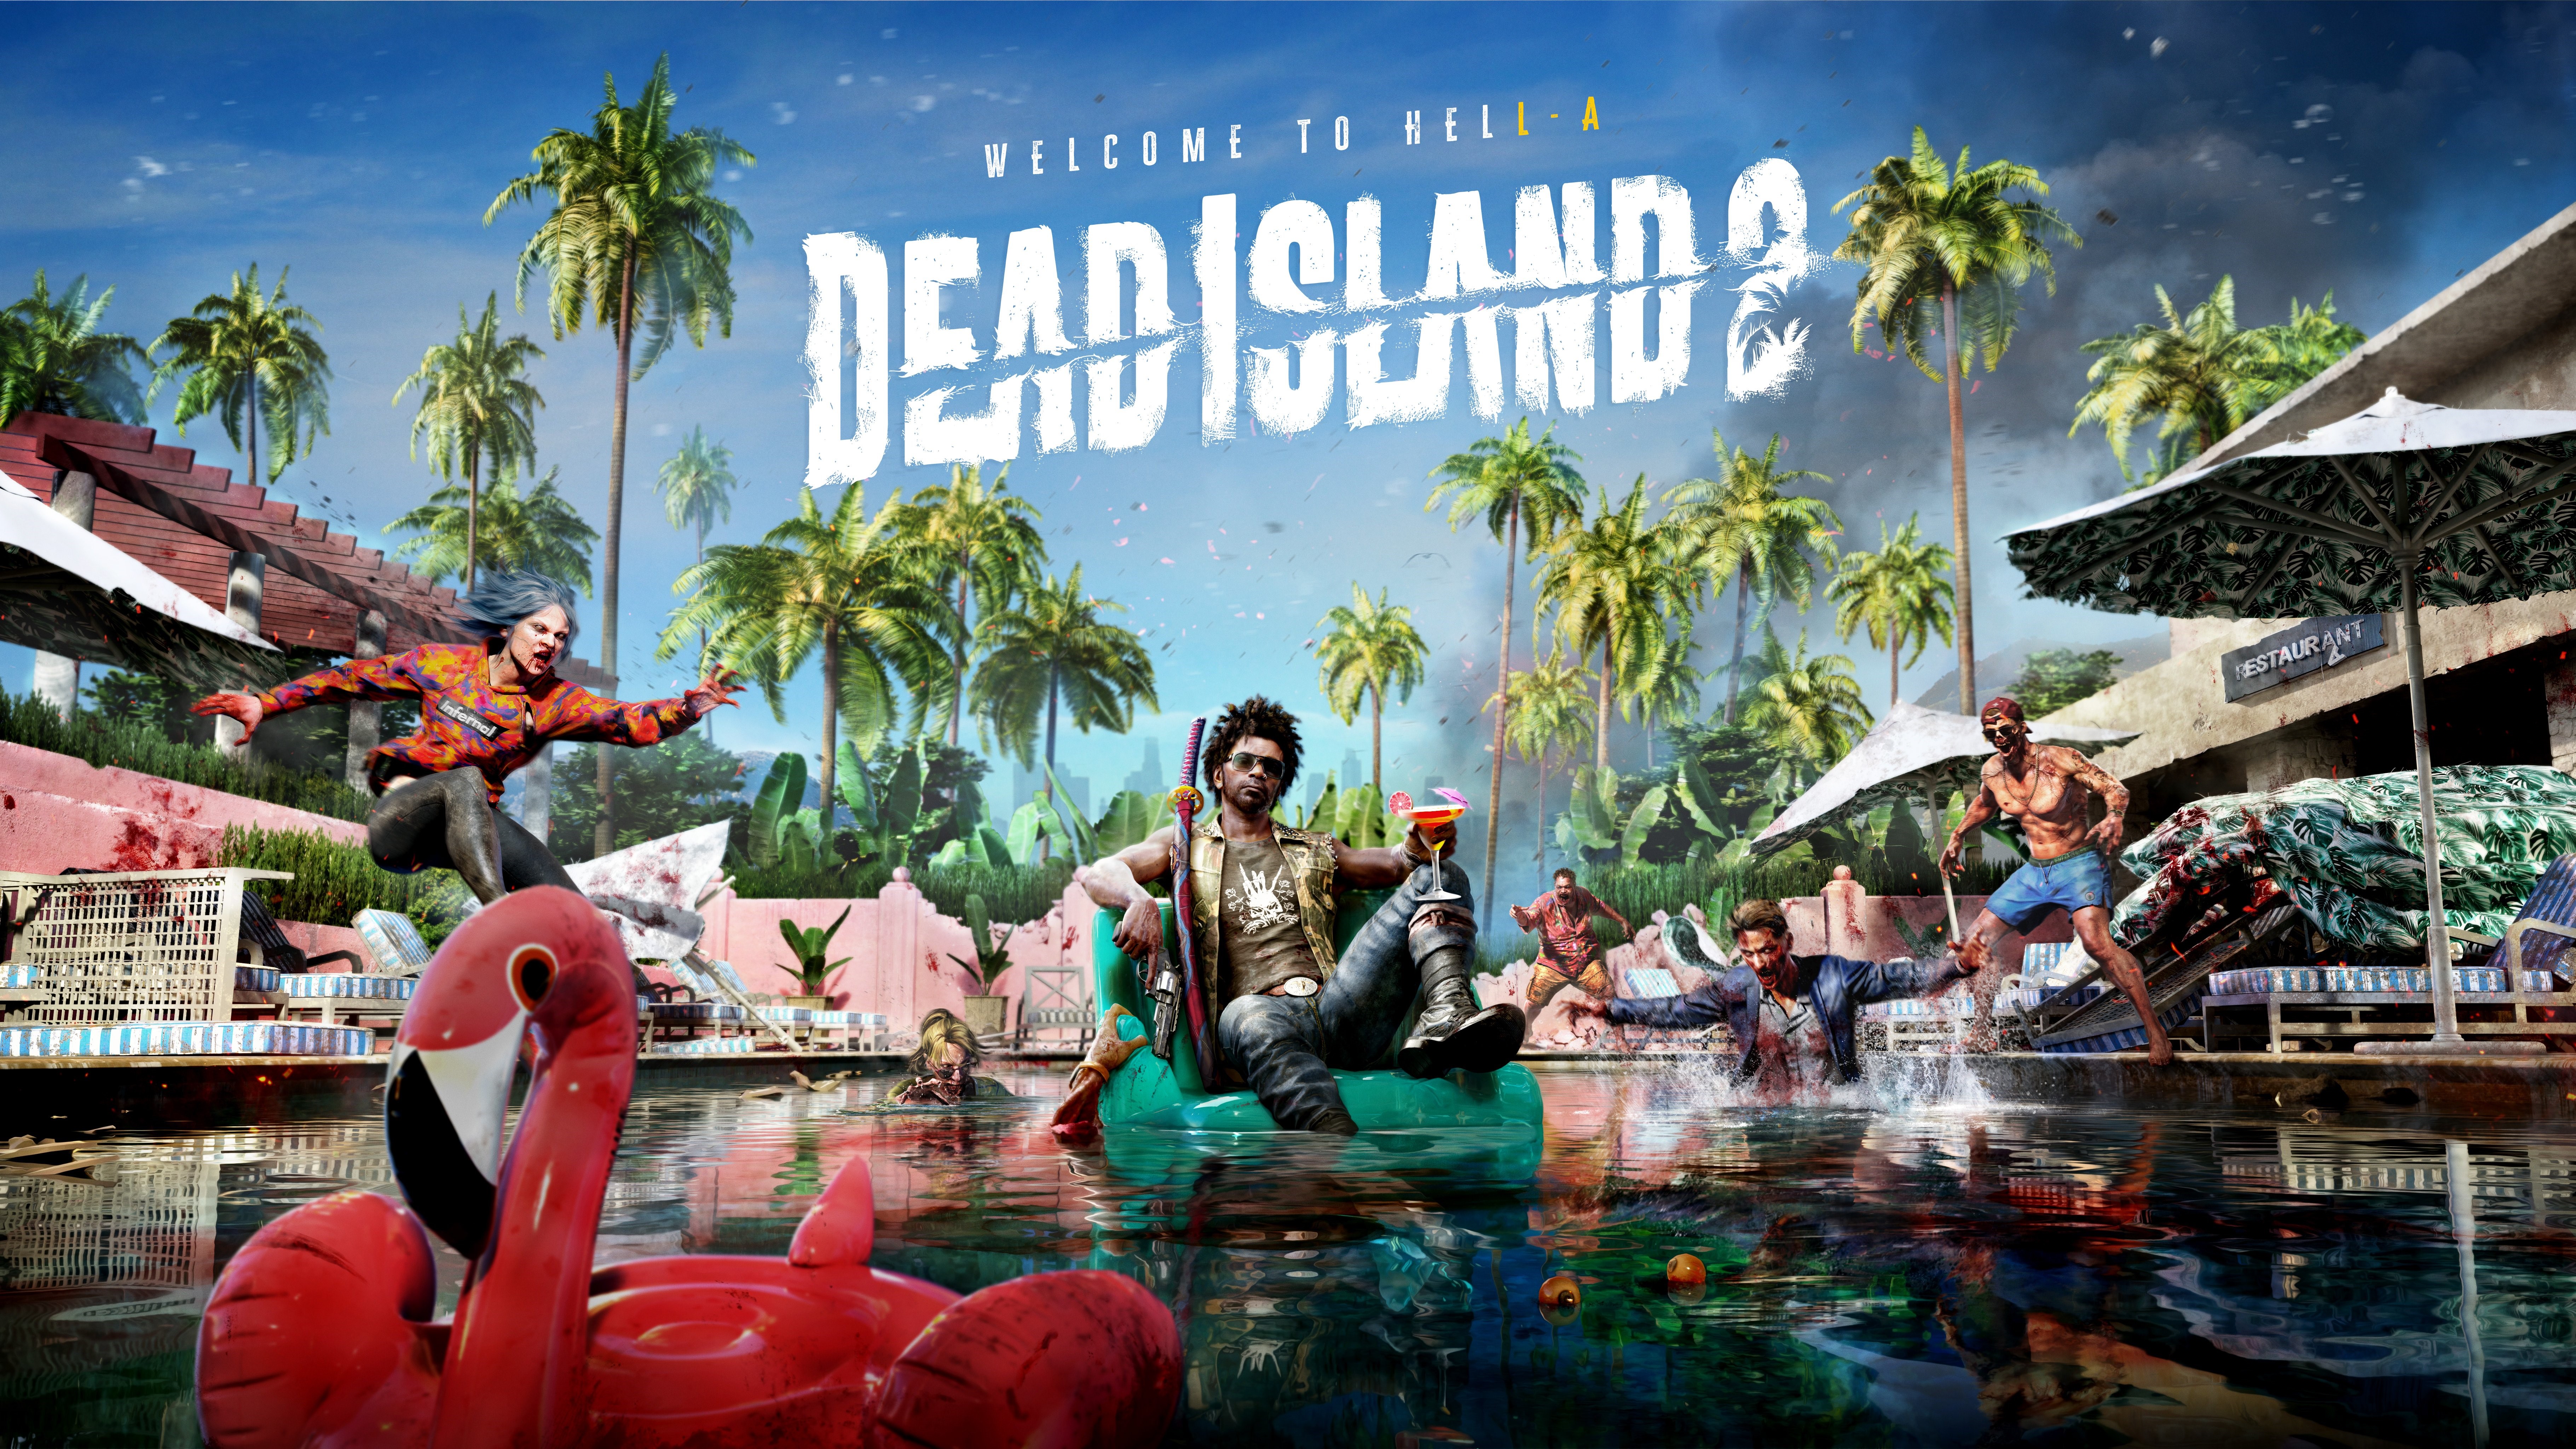 Dead island 2 легендарное